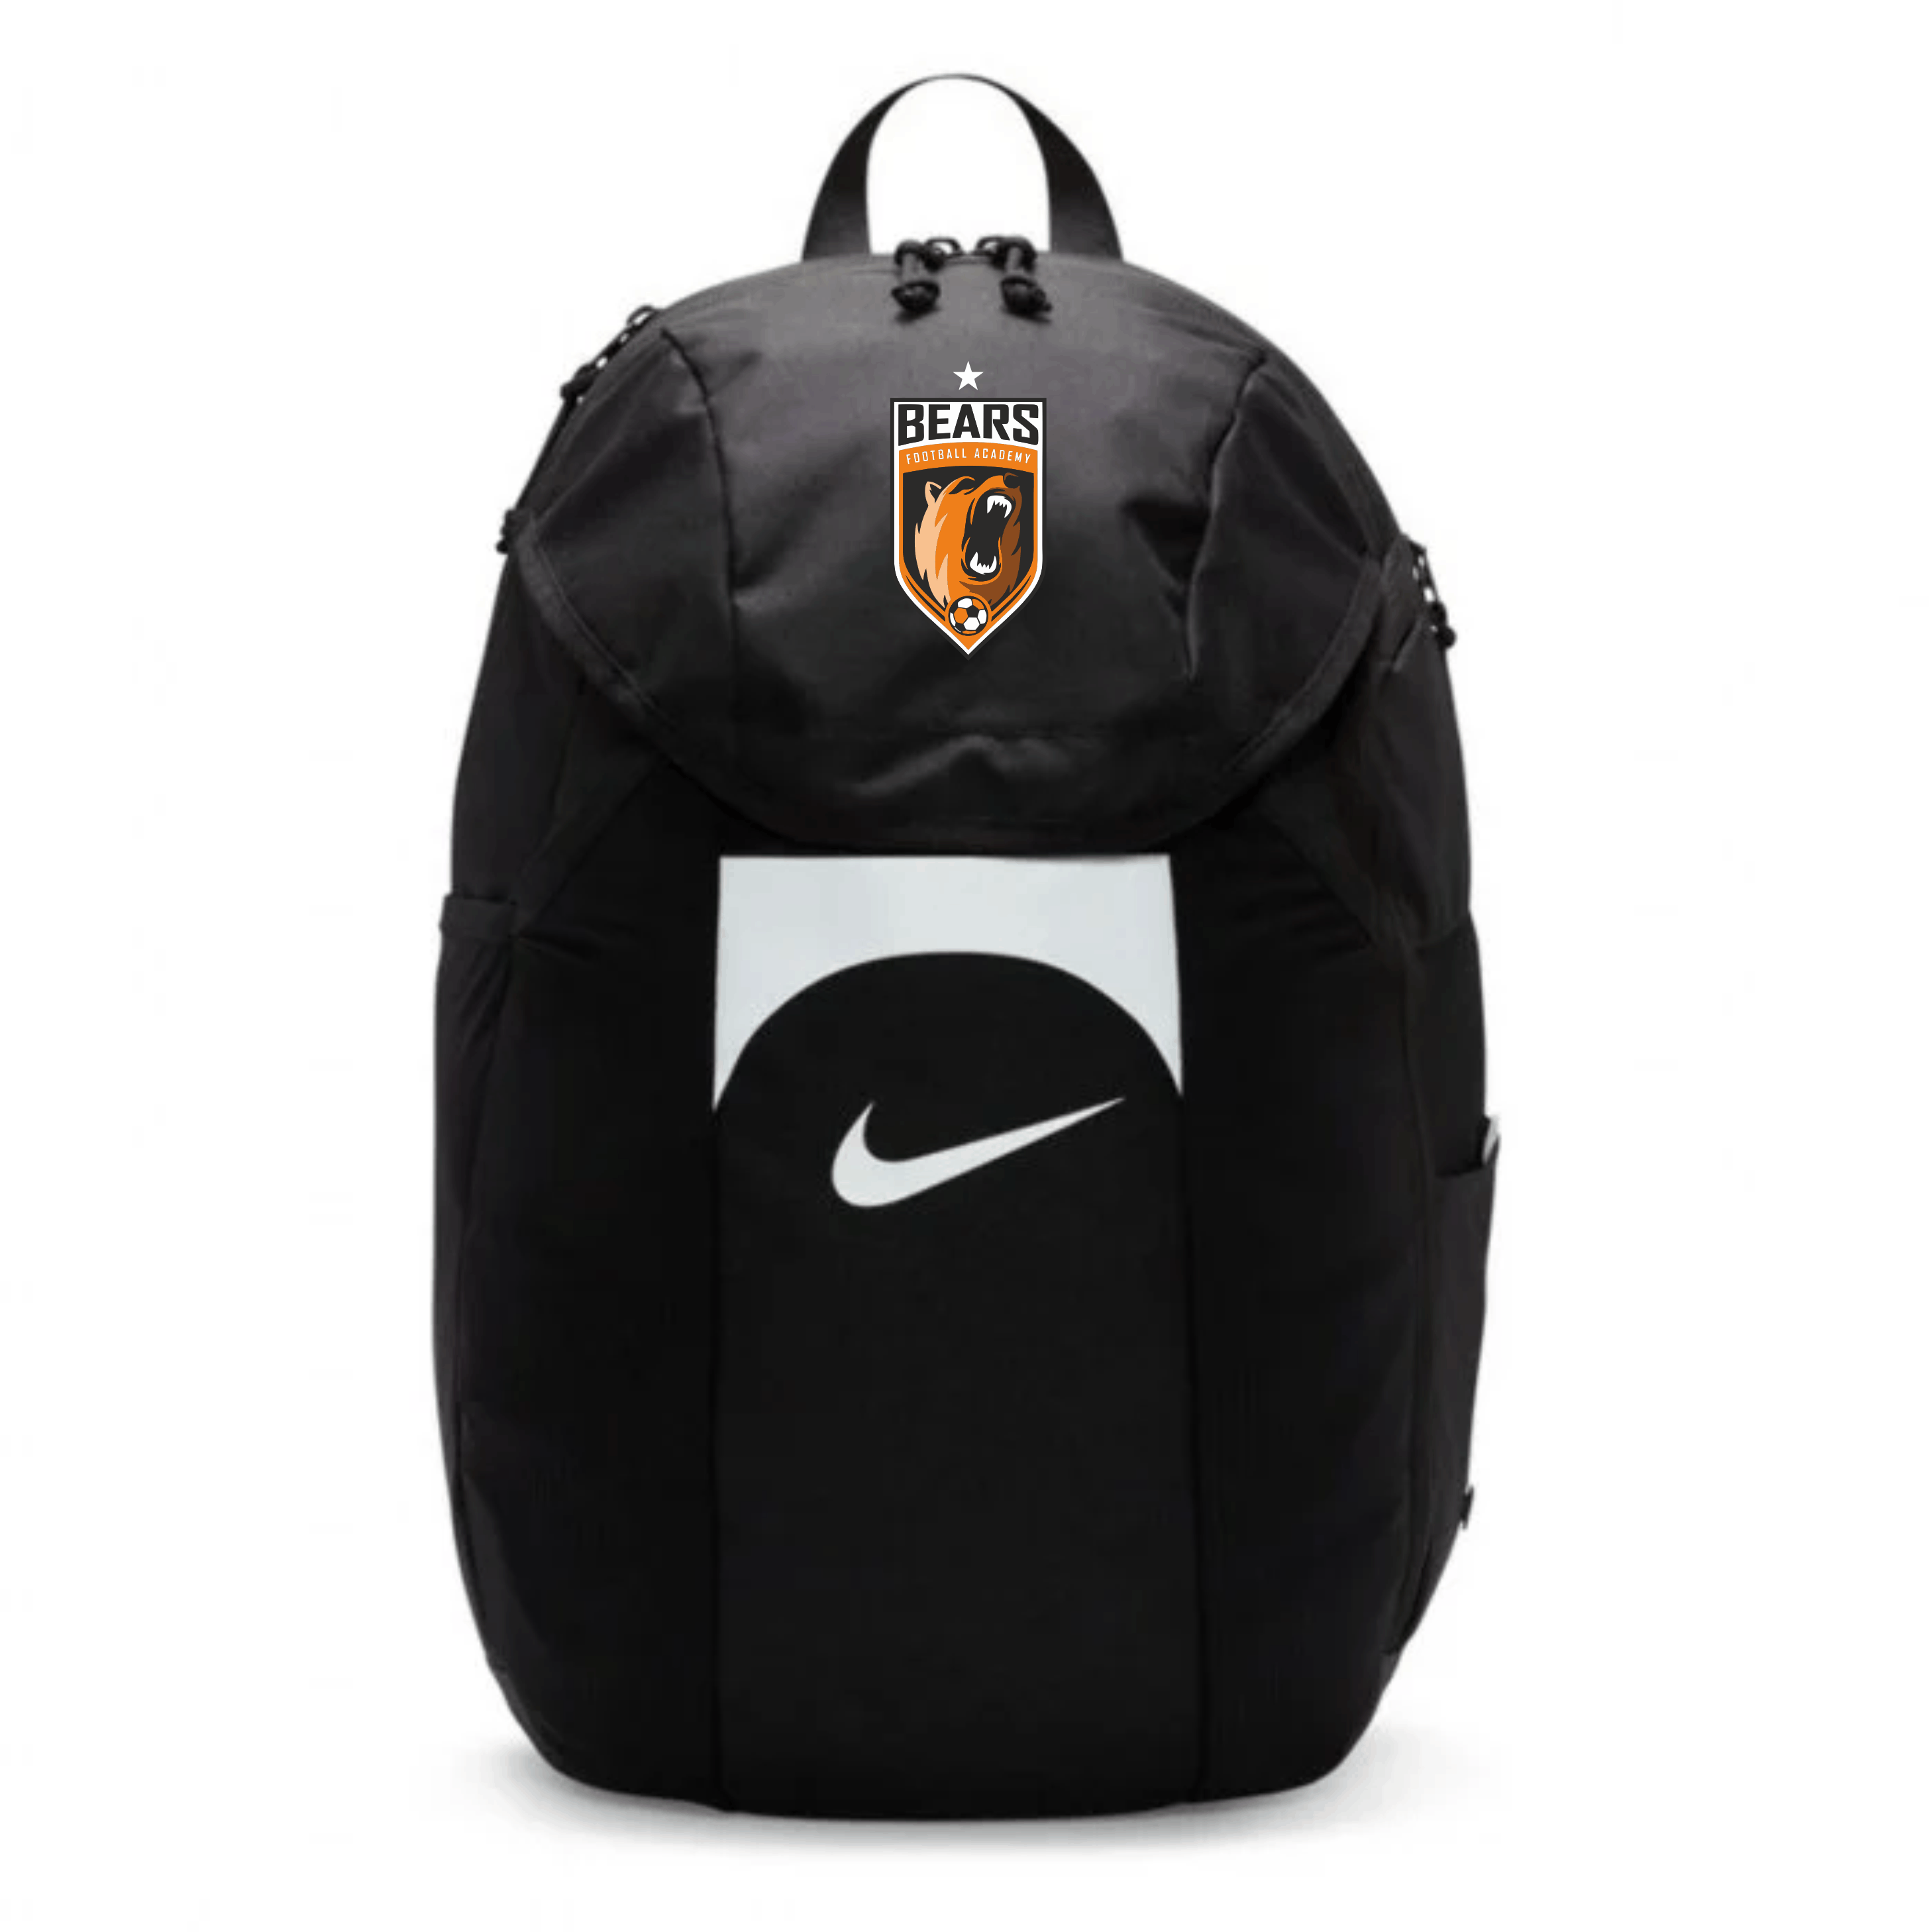 Bears Football Academy - Nike Backpack